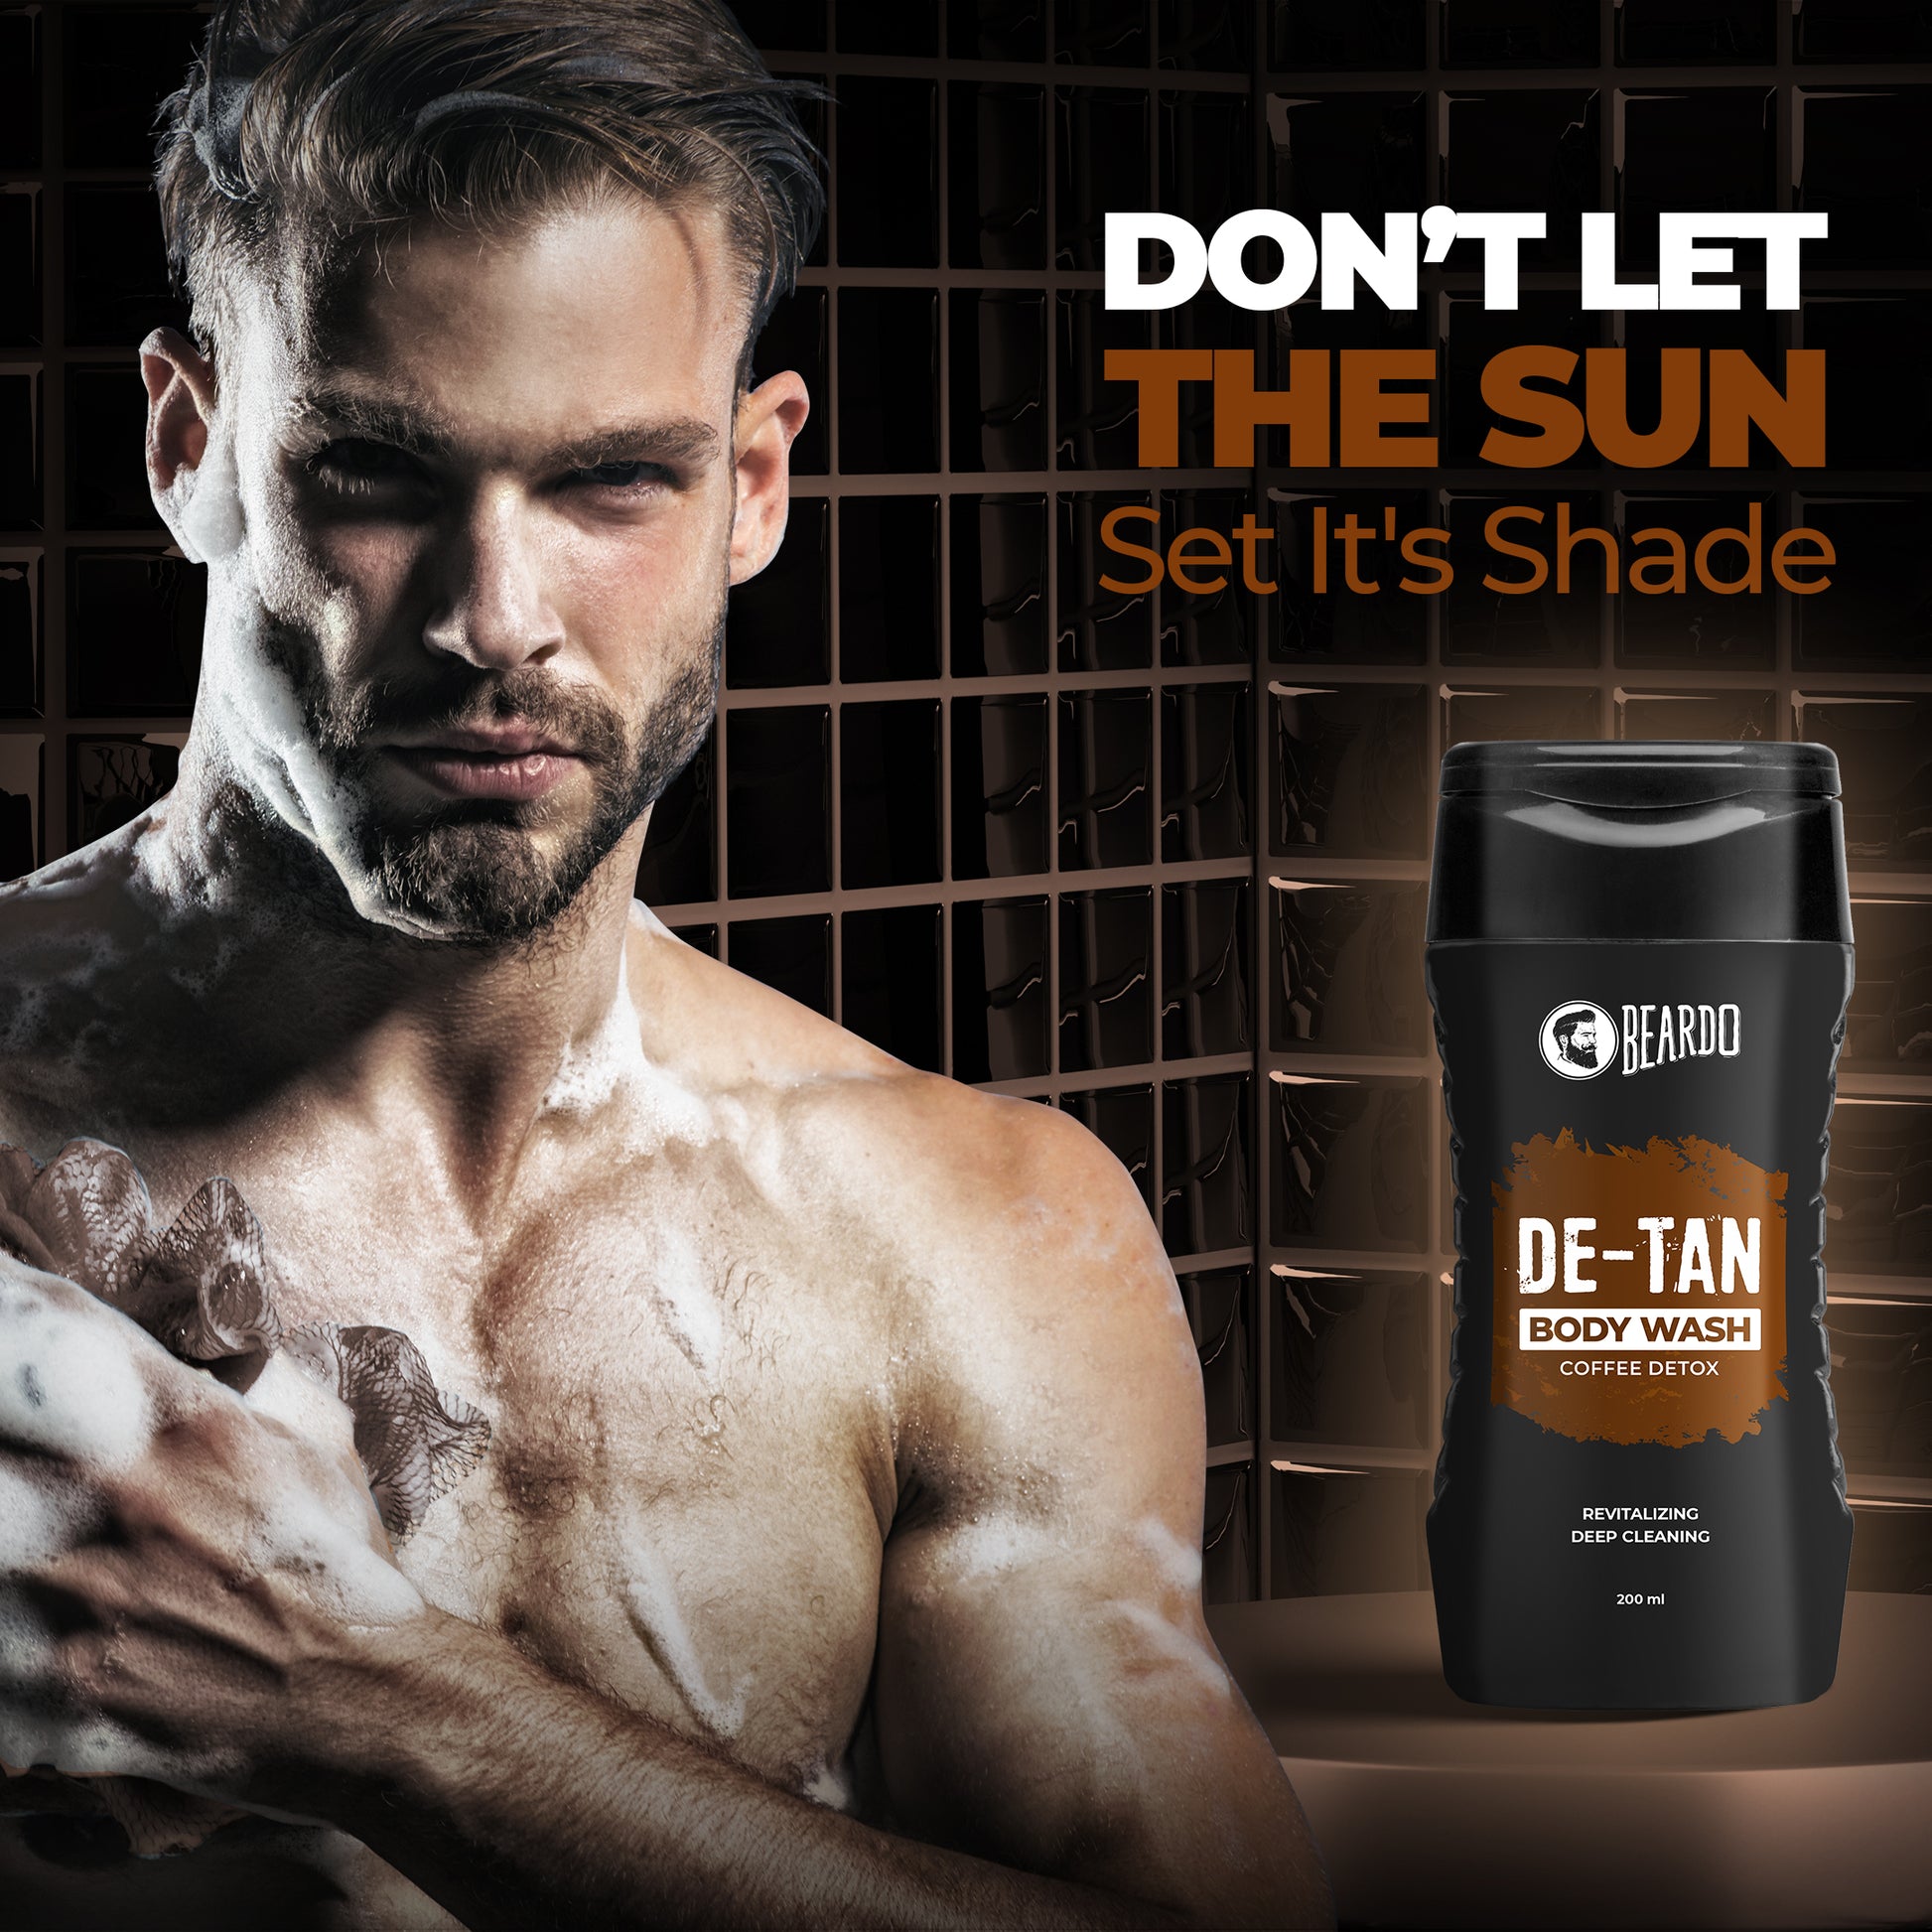 Does body wash remove tan, Is de tan beneficial